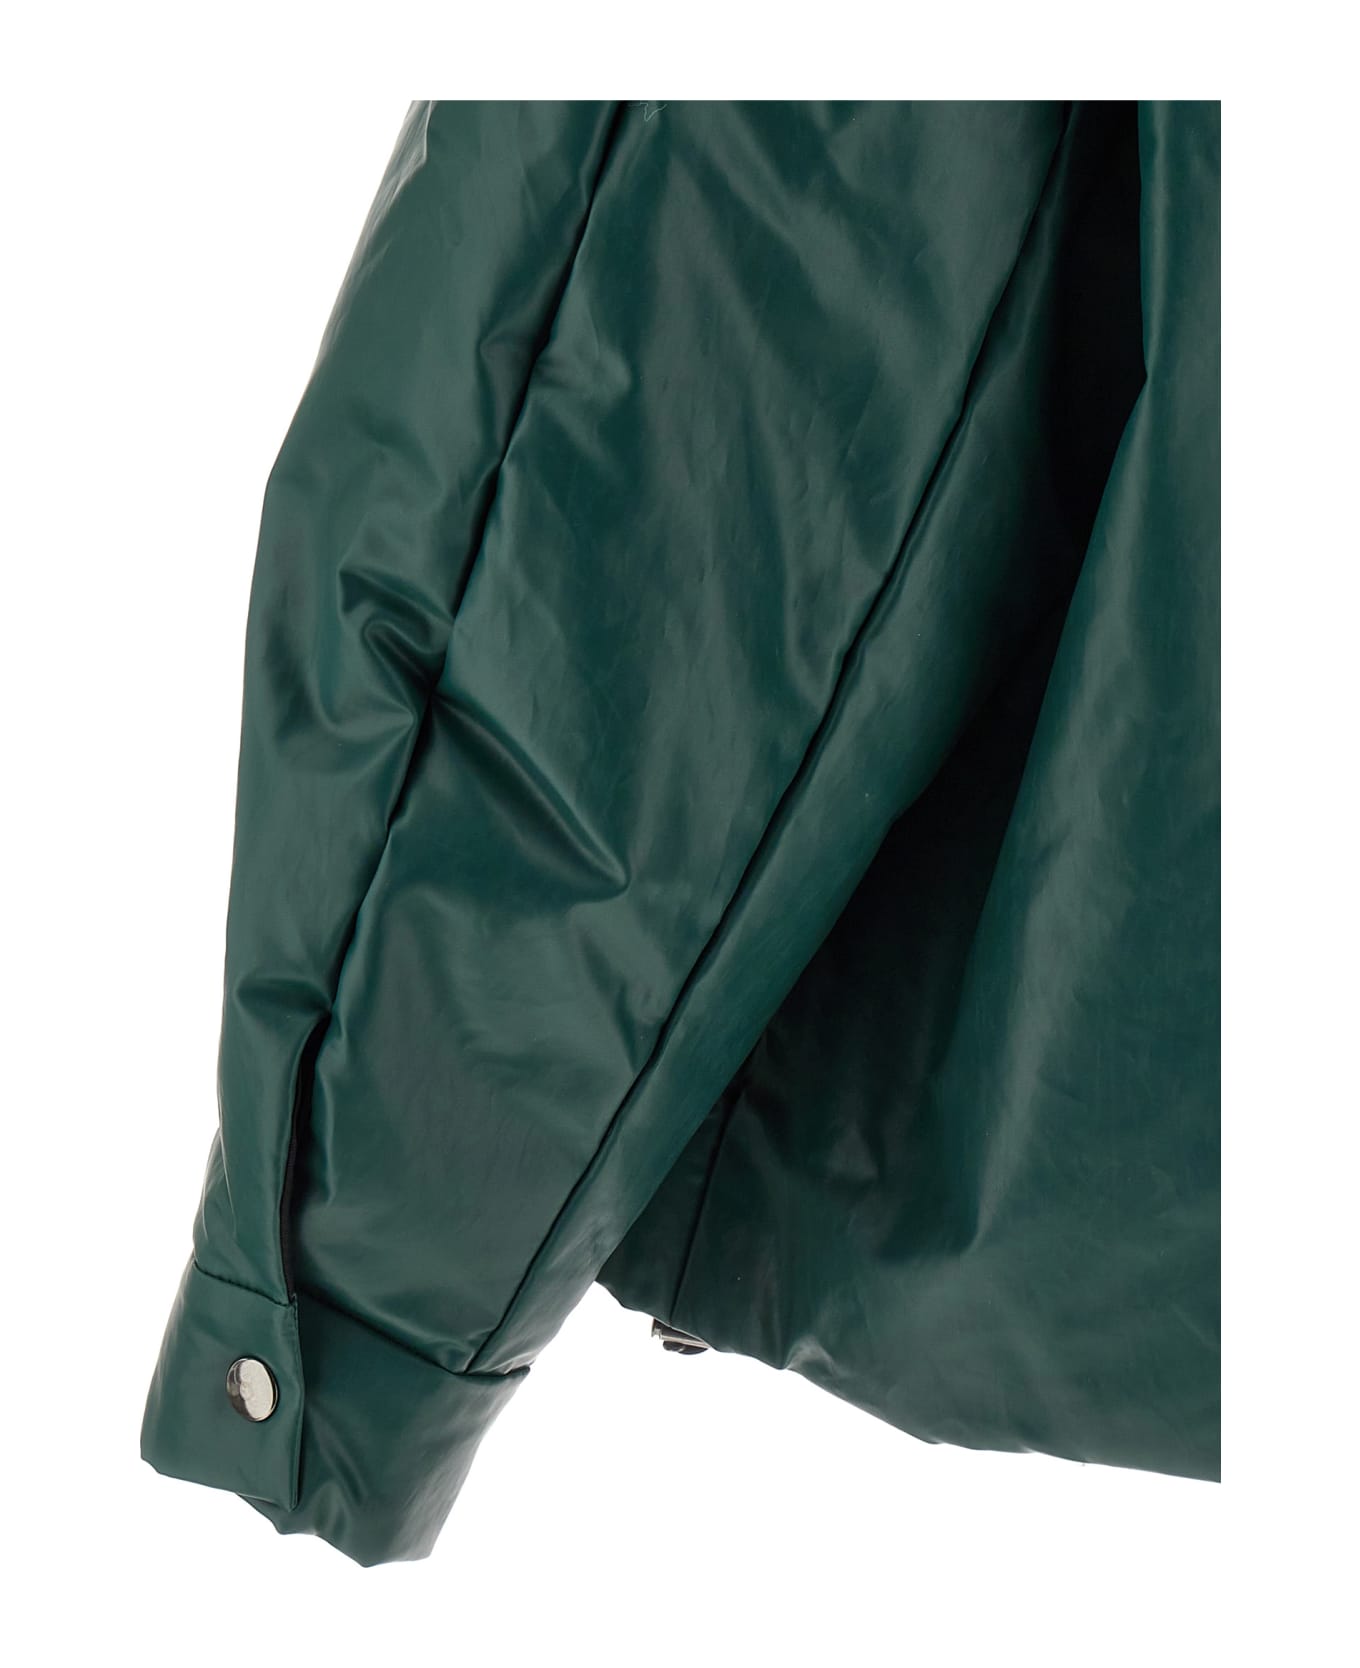 KASSL Editions 'oversized Padded' Bomber Jacket - Green ジャケット